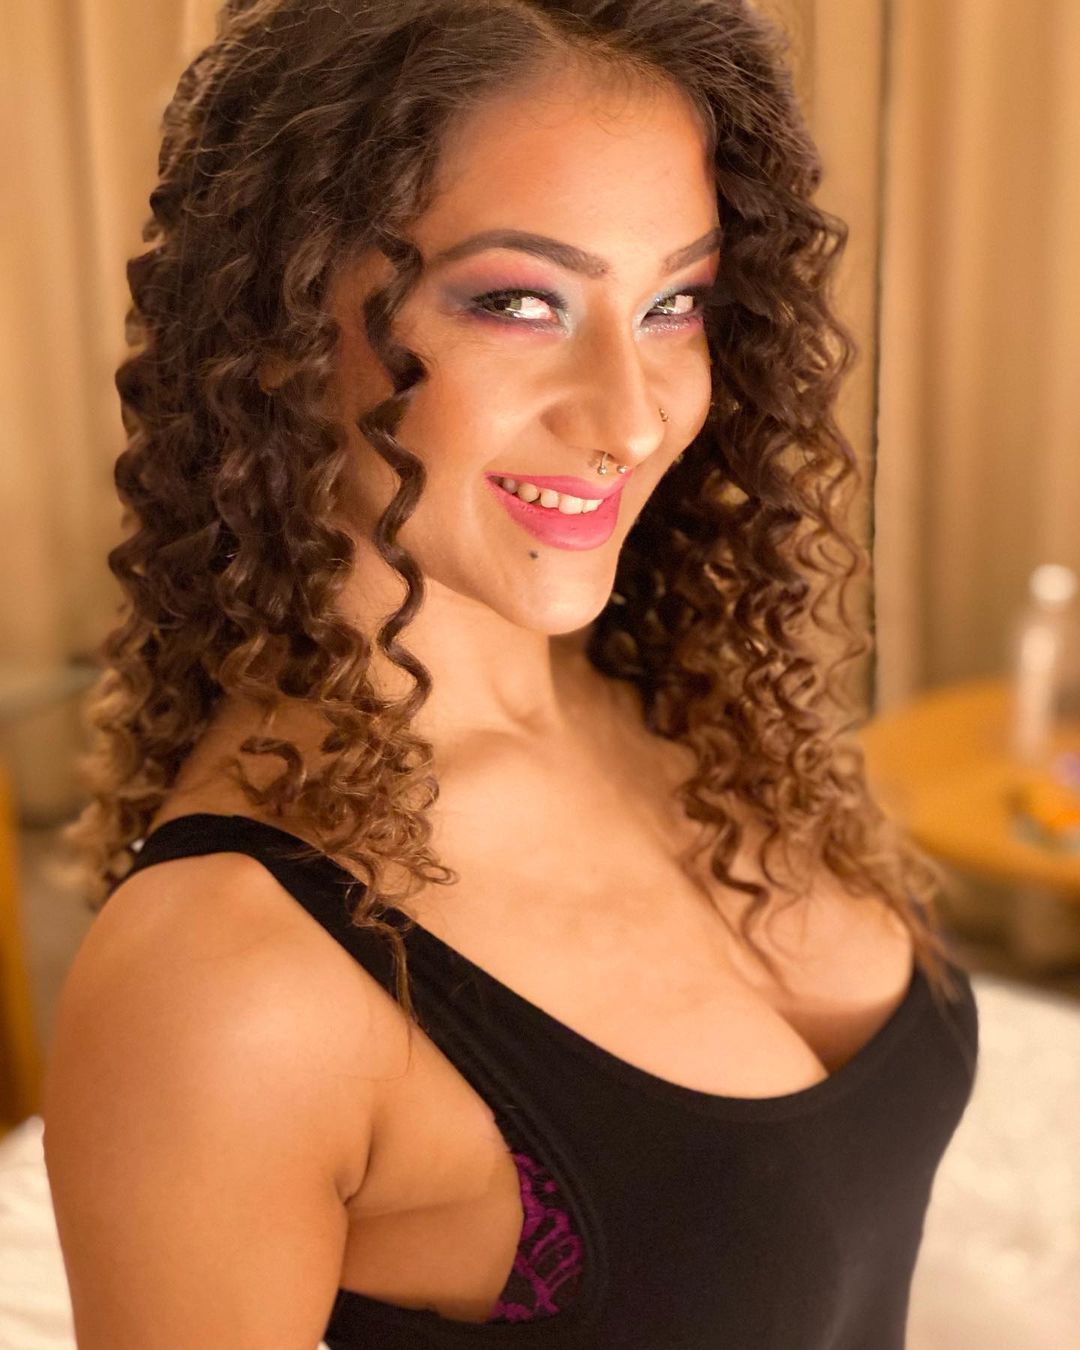 Namrata Malla Zenith Hot and Sexy Pictures - Insta Stars